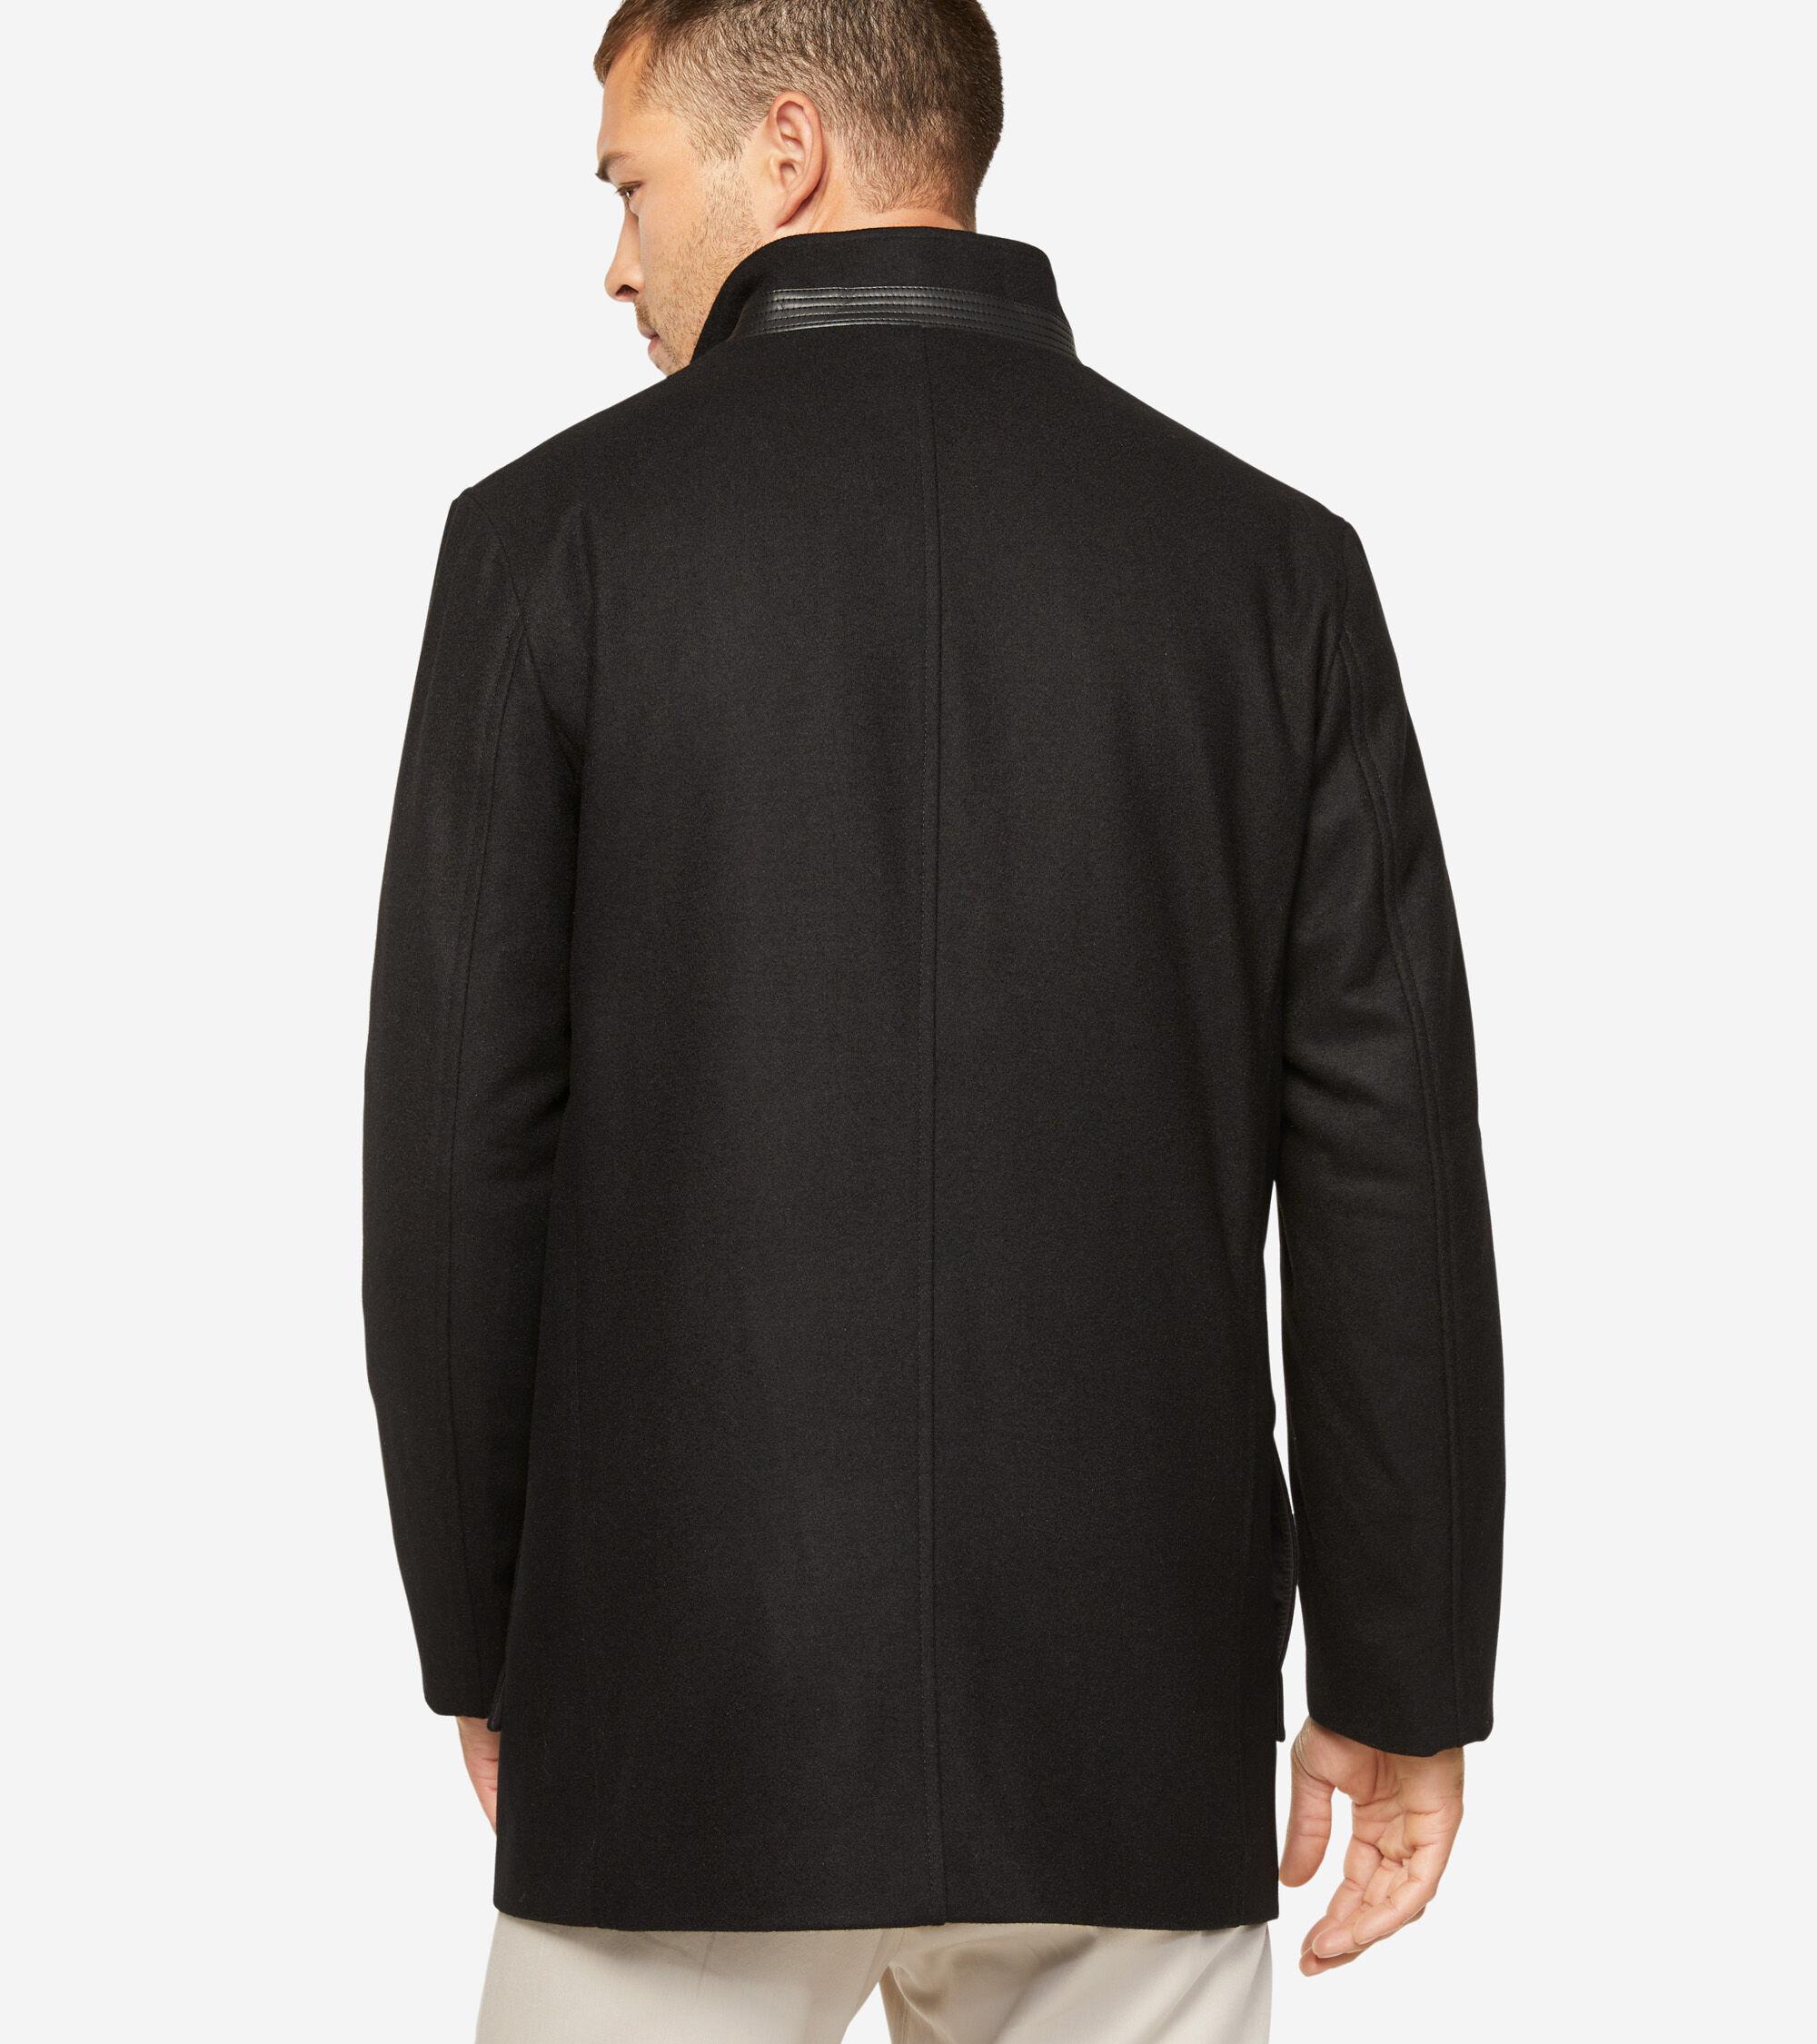 Cole Haan Melton Wool 3-in-1 Coat in Black for Men - Lyst